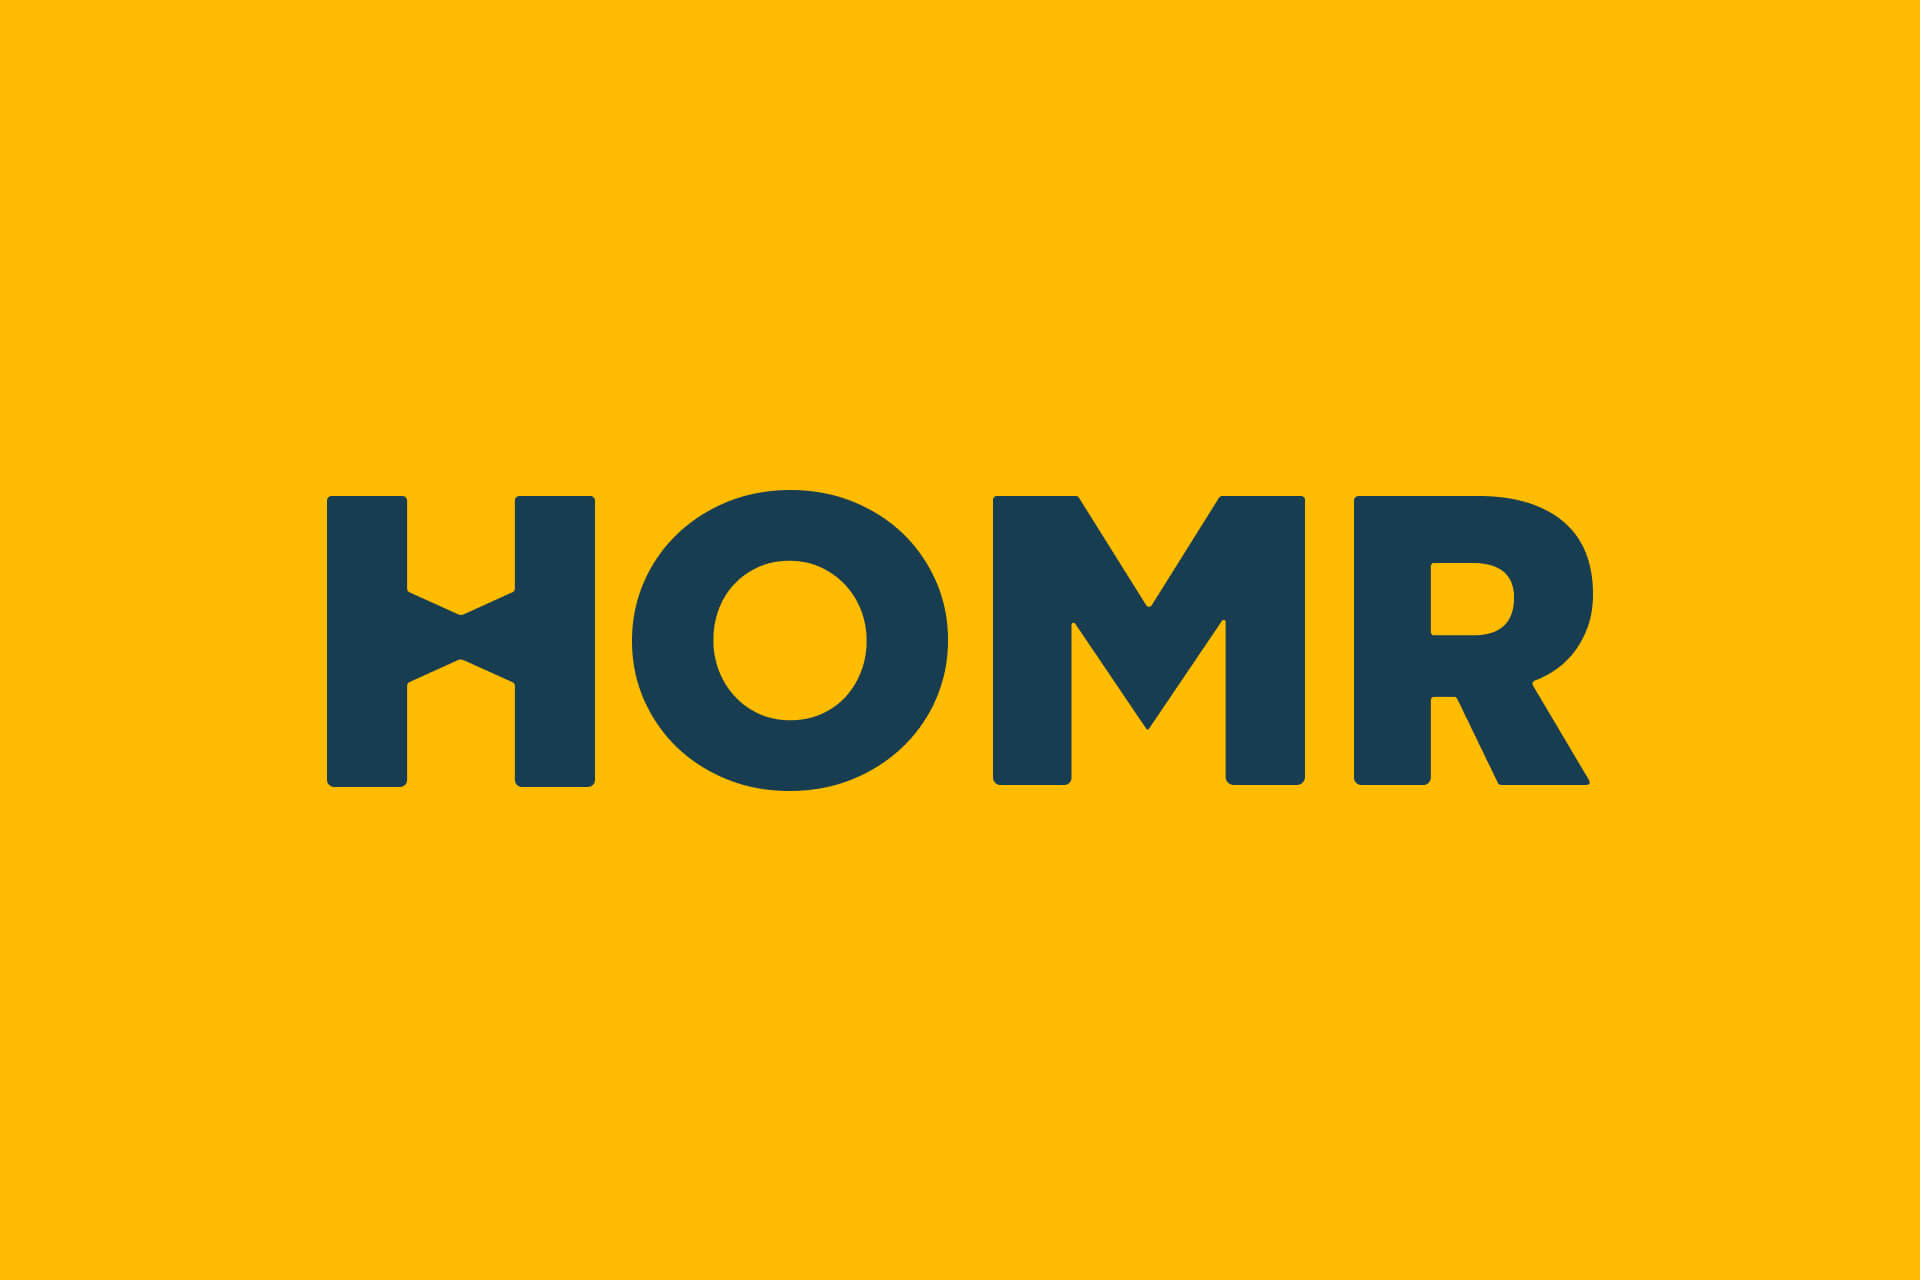 HOMR logo